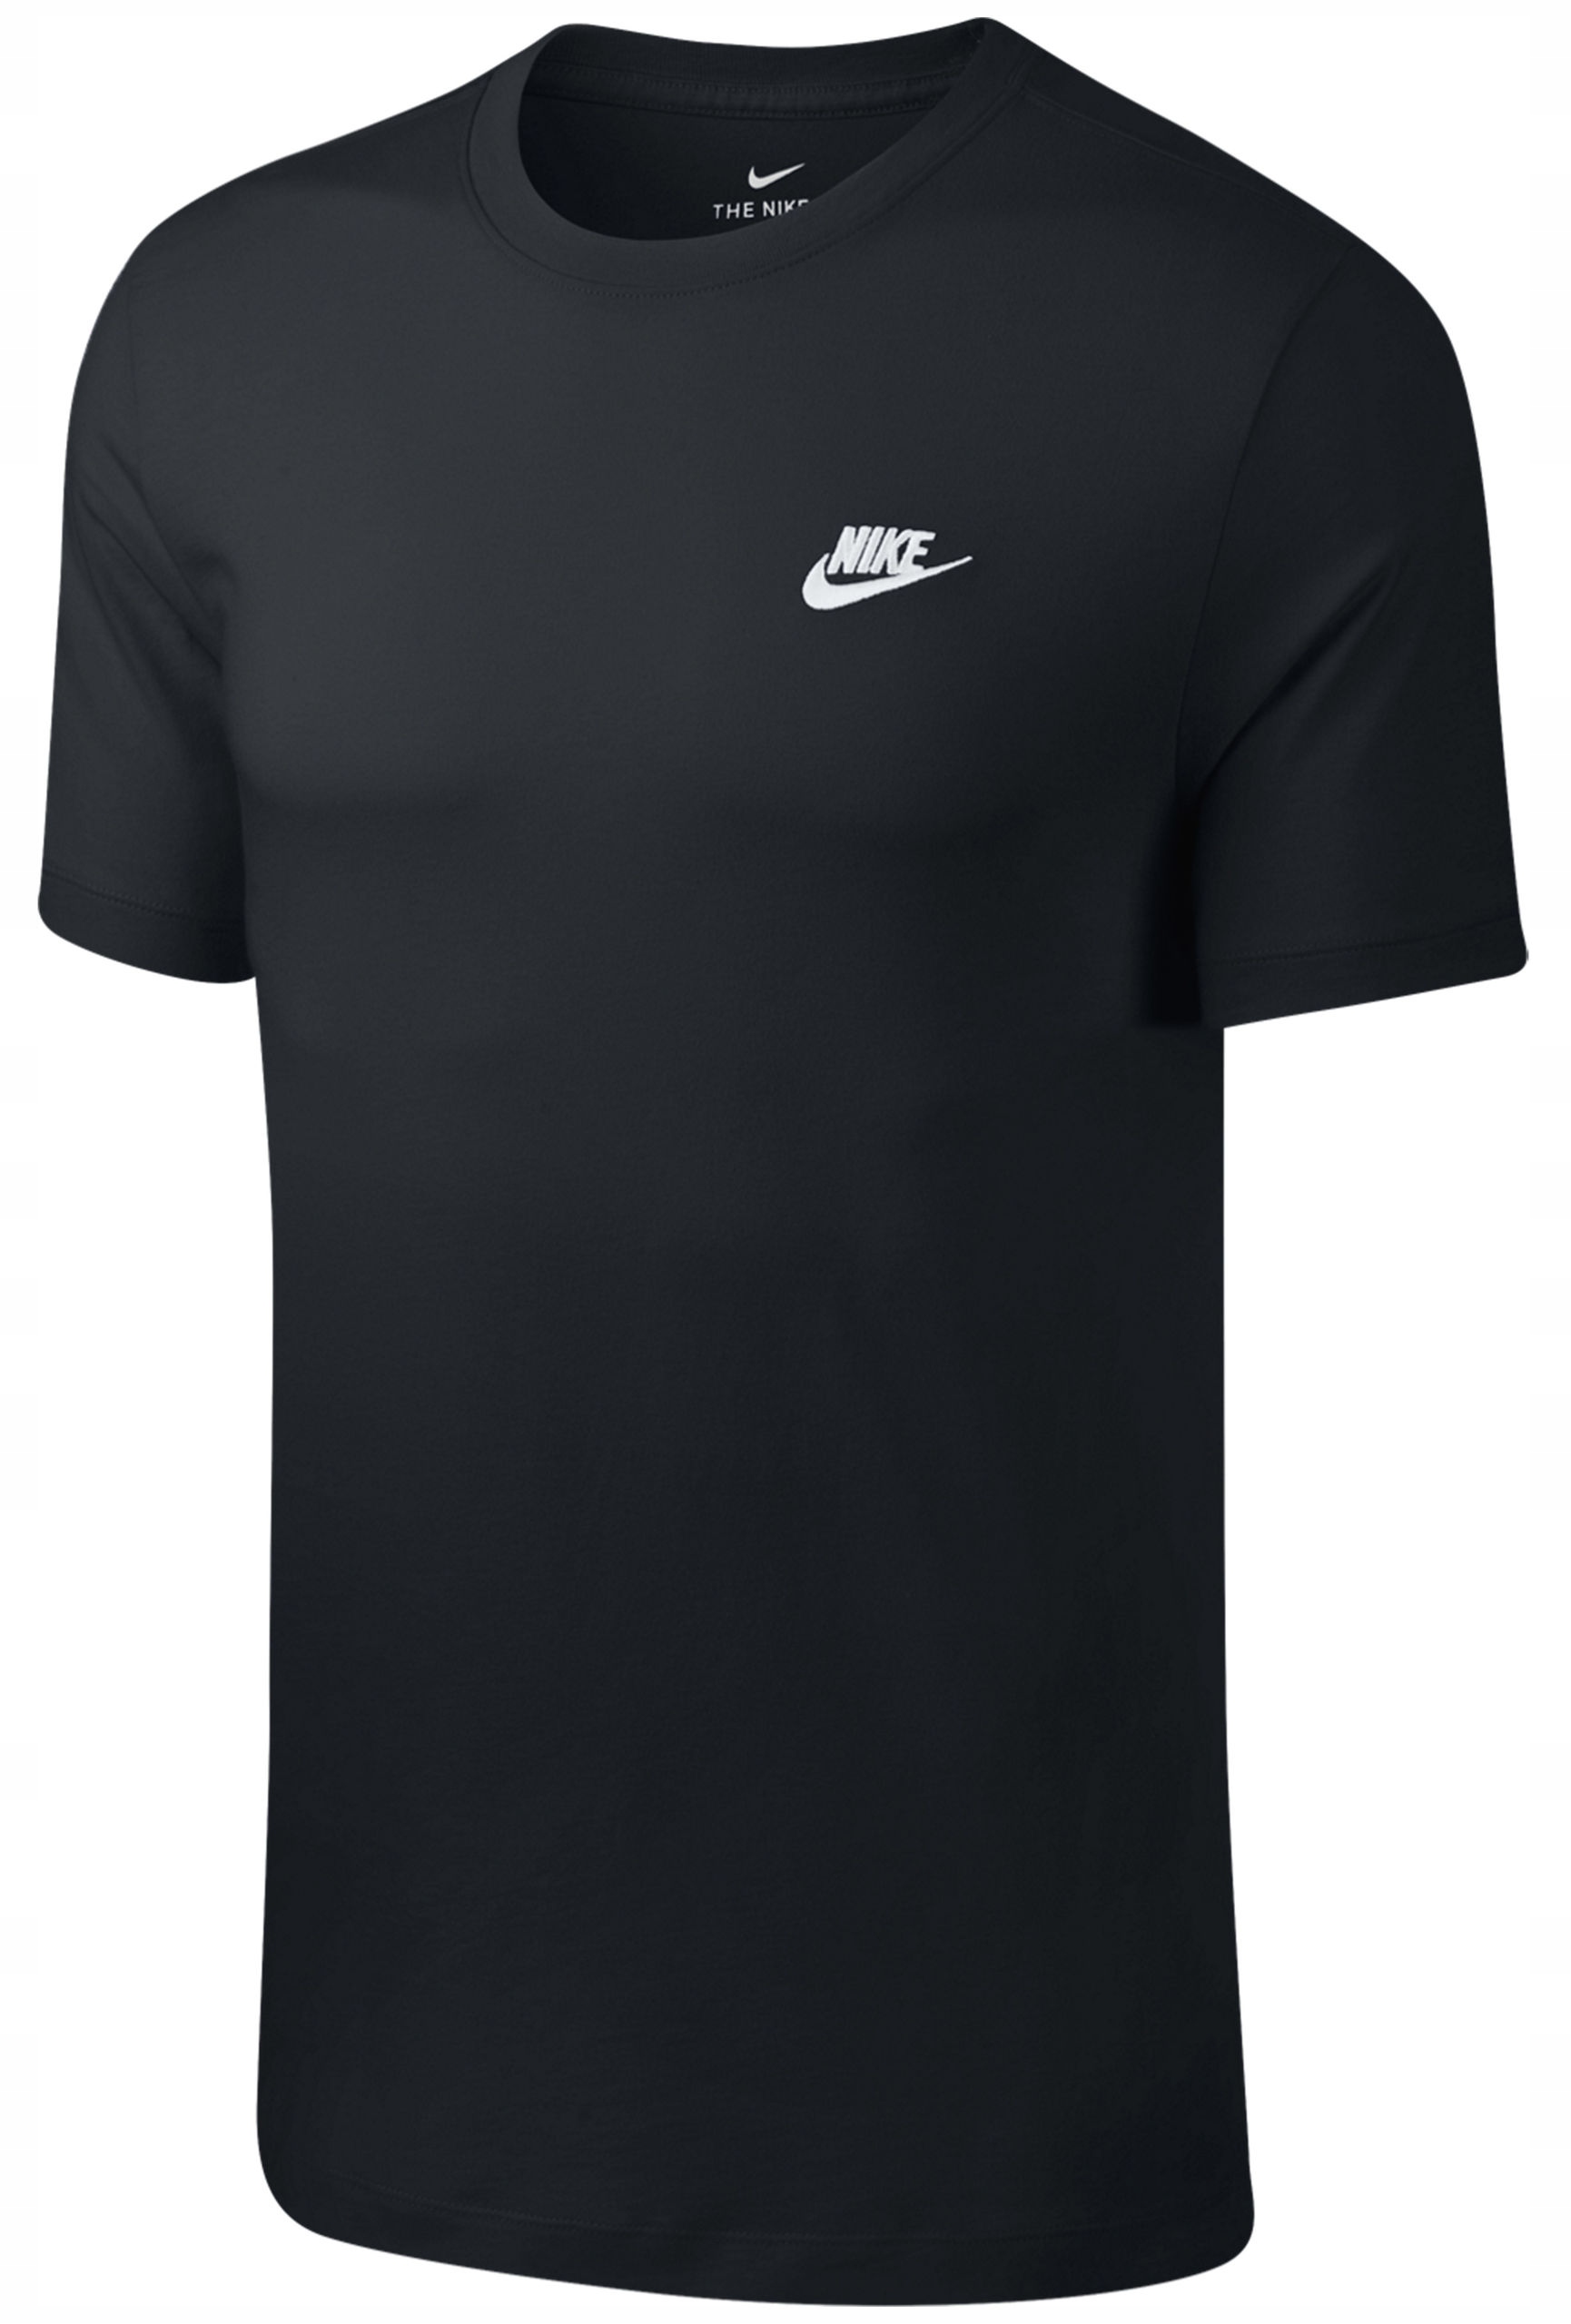 Syracuse nike shirt: Amazon.com: New G.D Graphic T-Shirt Match Nike ...